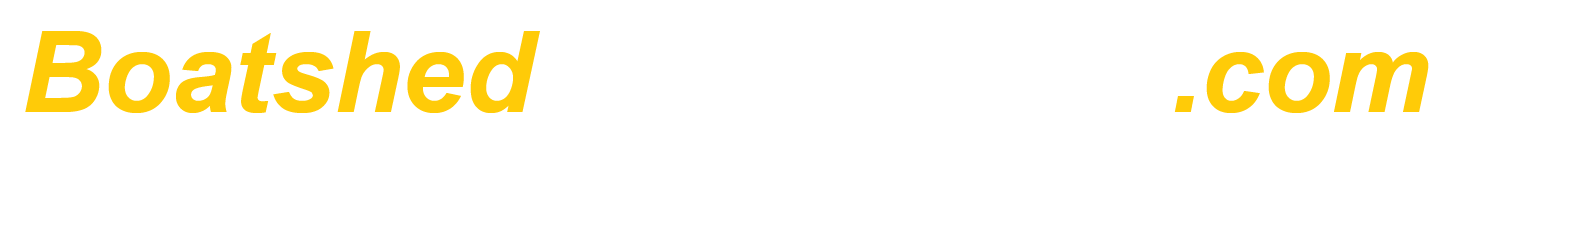 BoatshedFloridaKeys.com - International Yacht Brokers